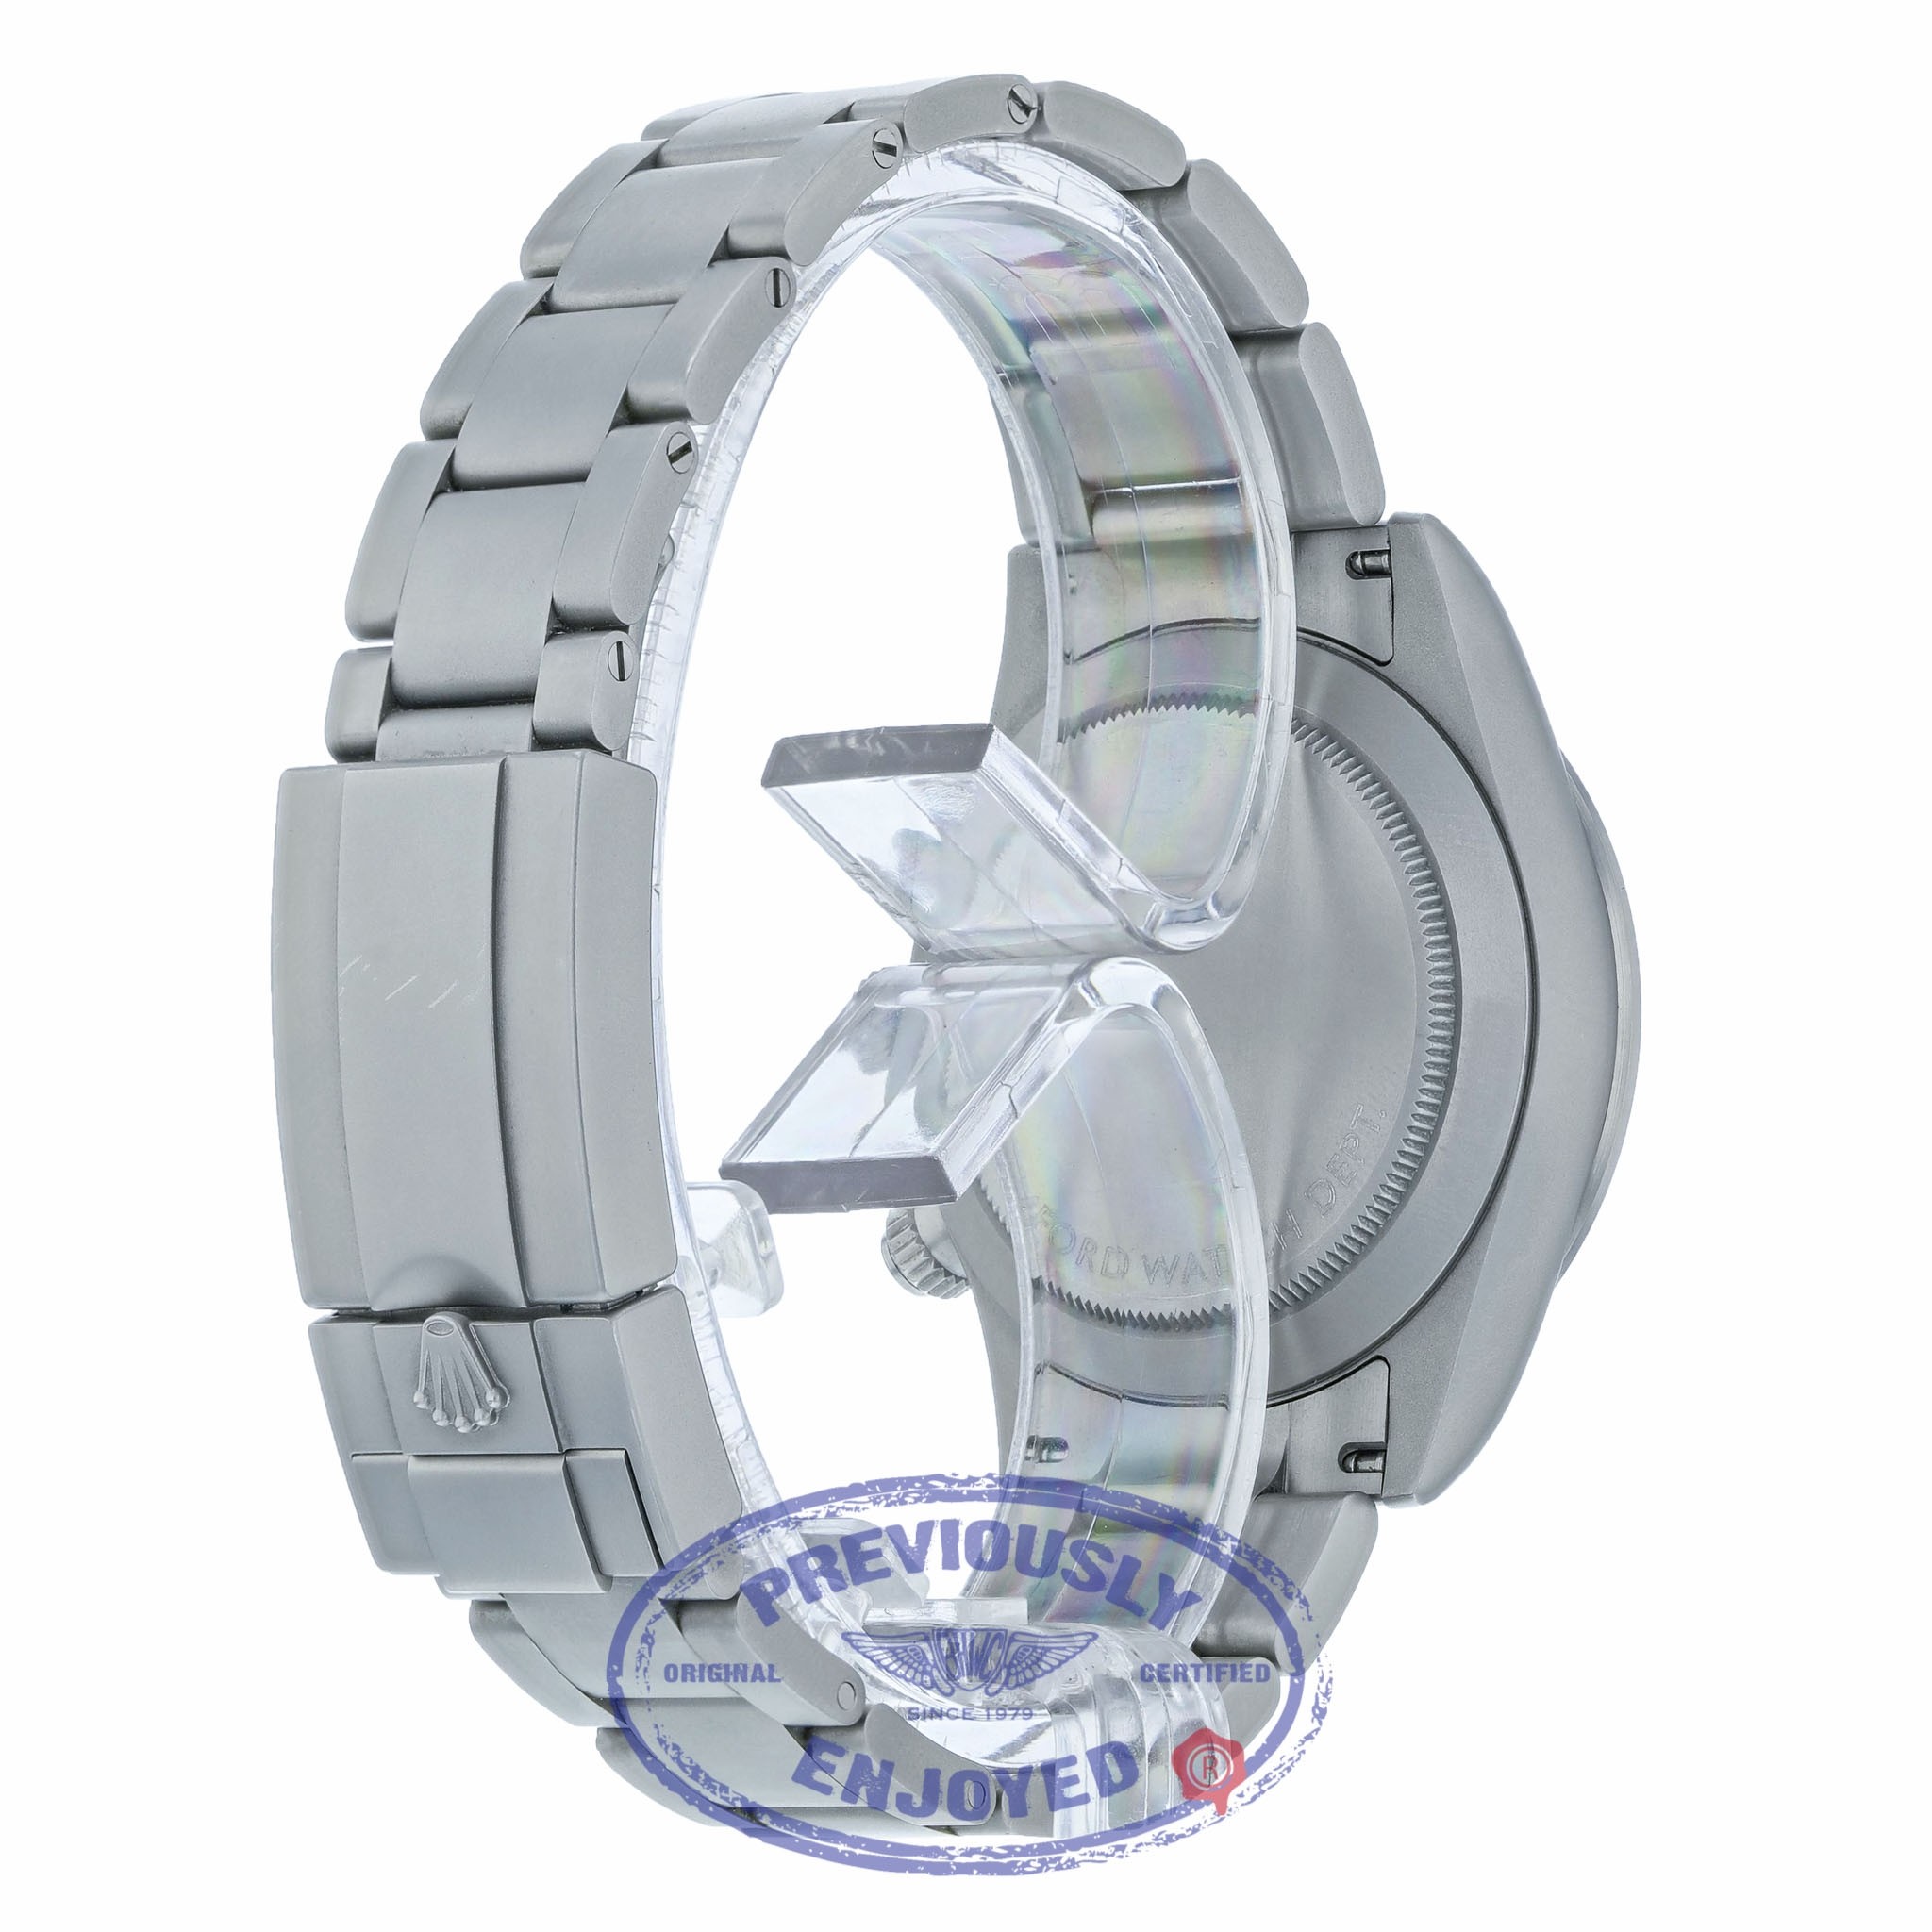 Bamford Watch Department – Rolex Heritage Dial Submariner – Aqua